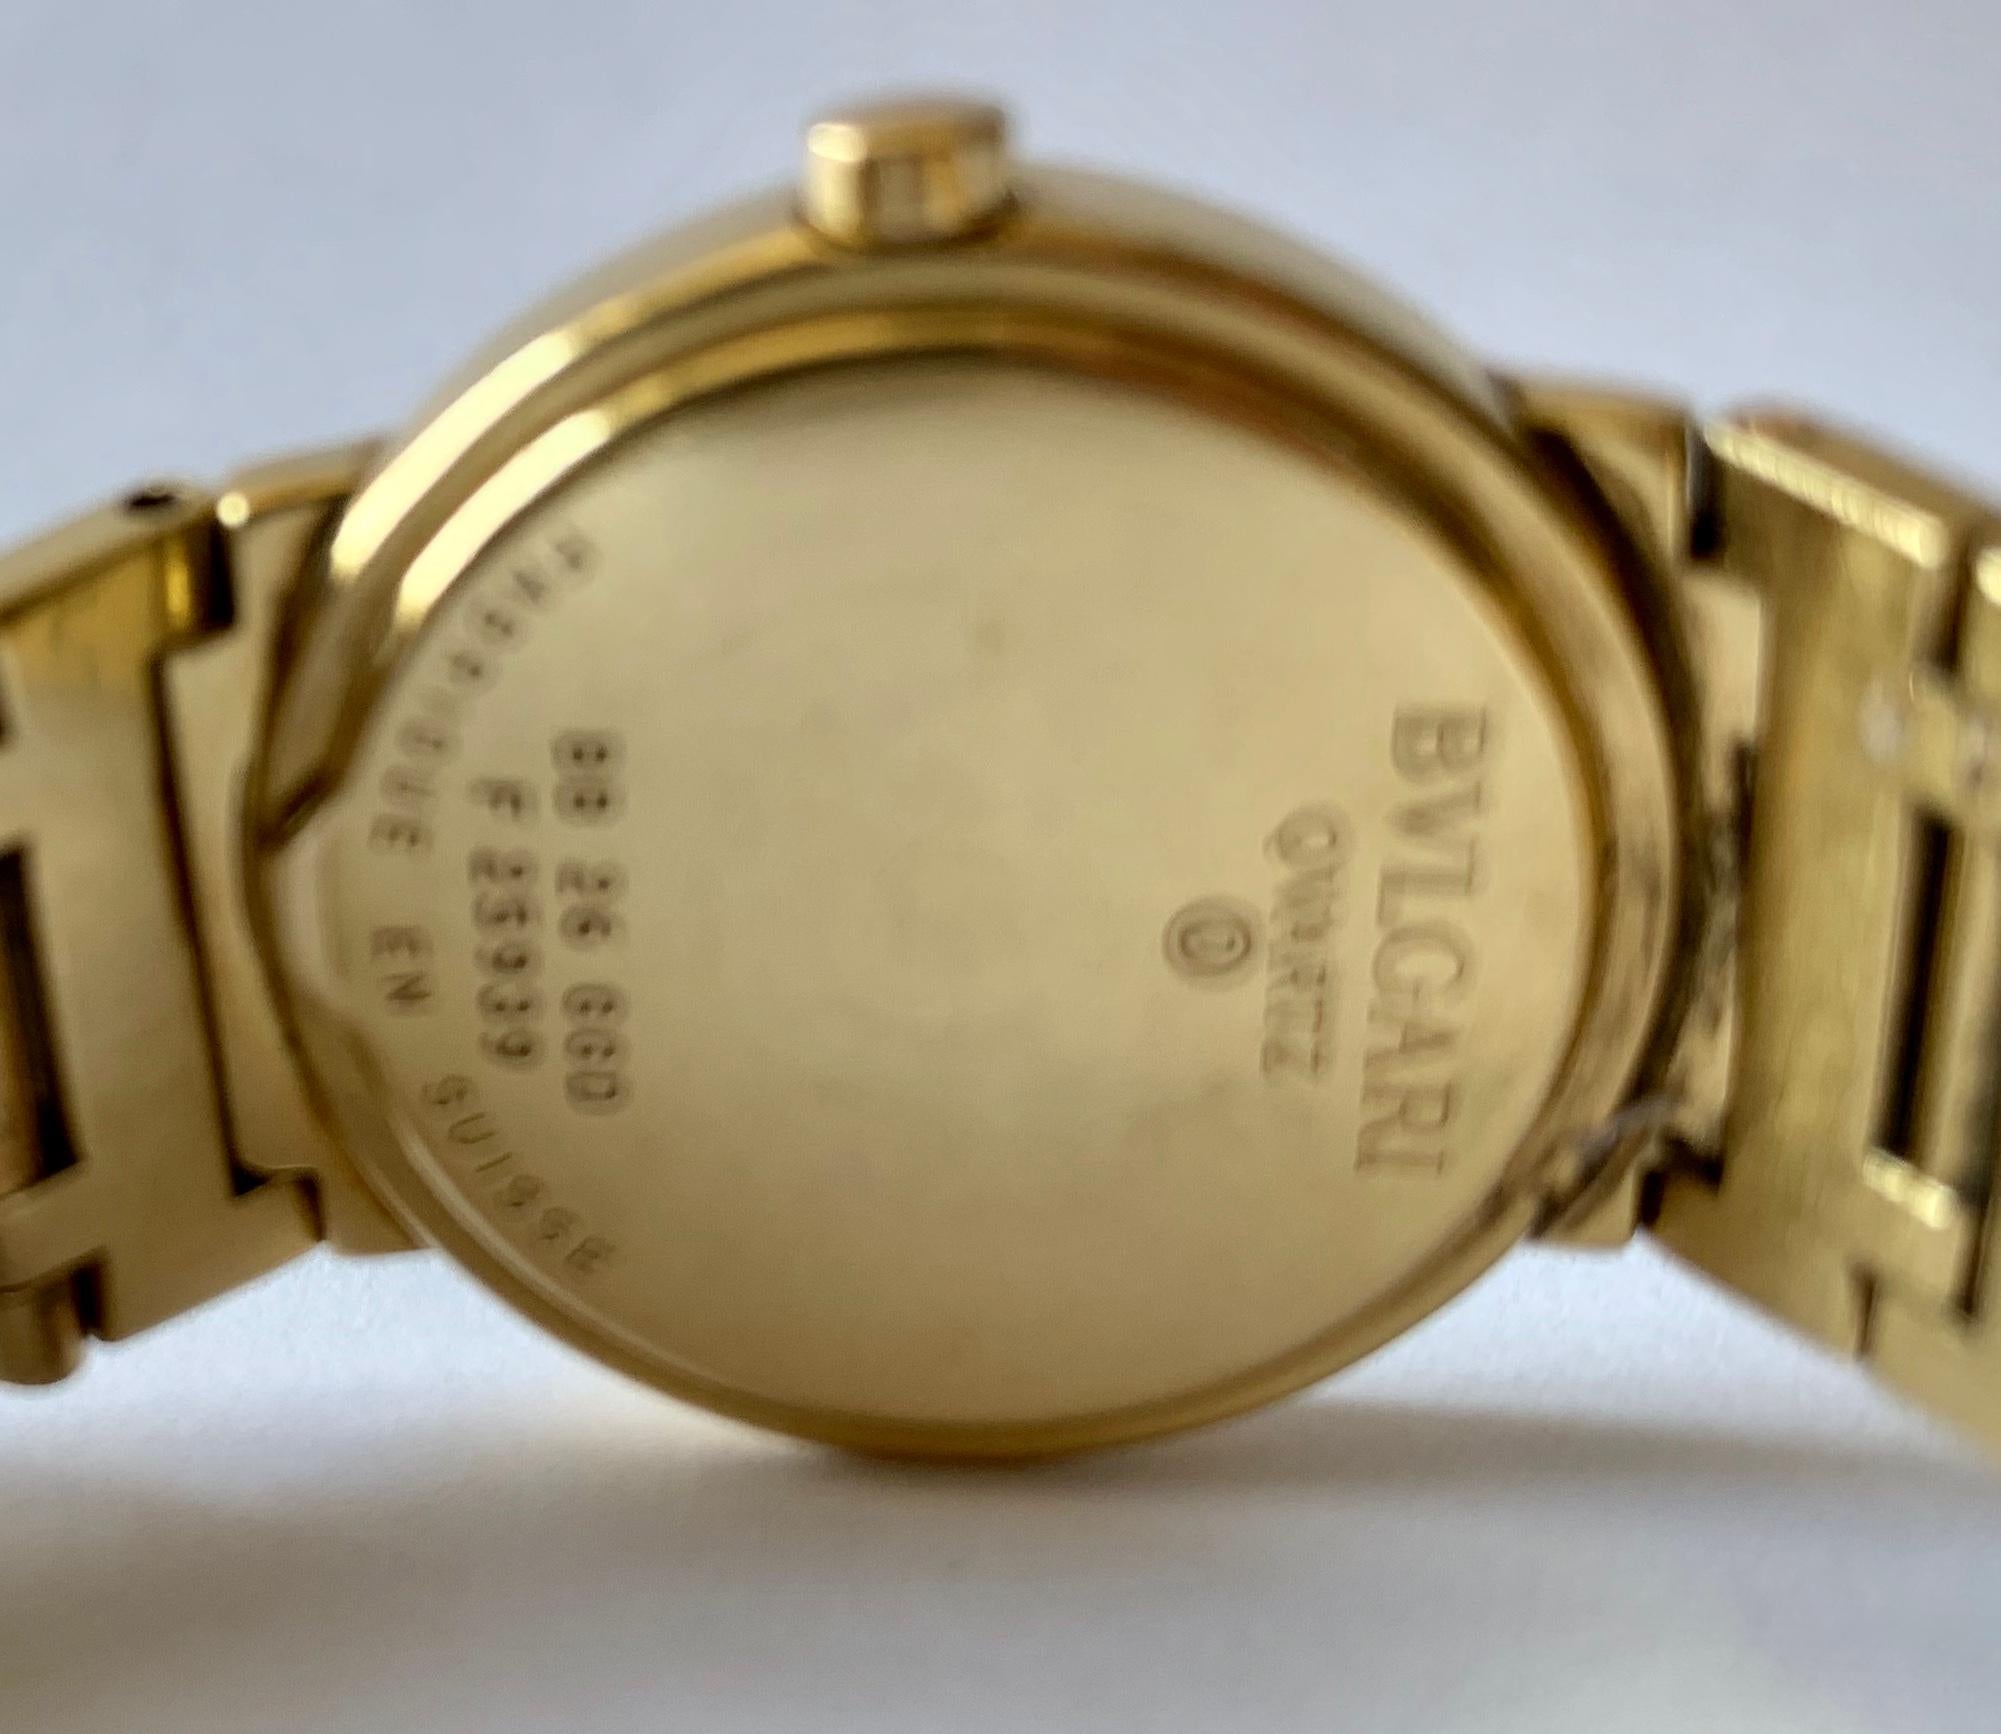 bvlgari 18k gold watch